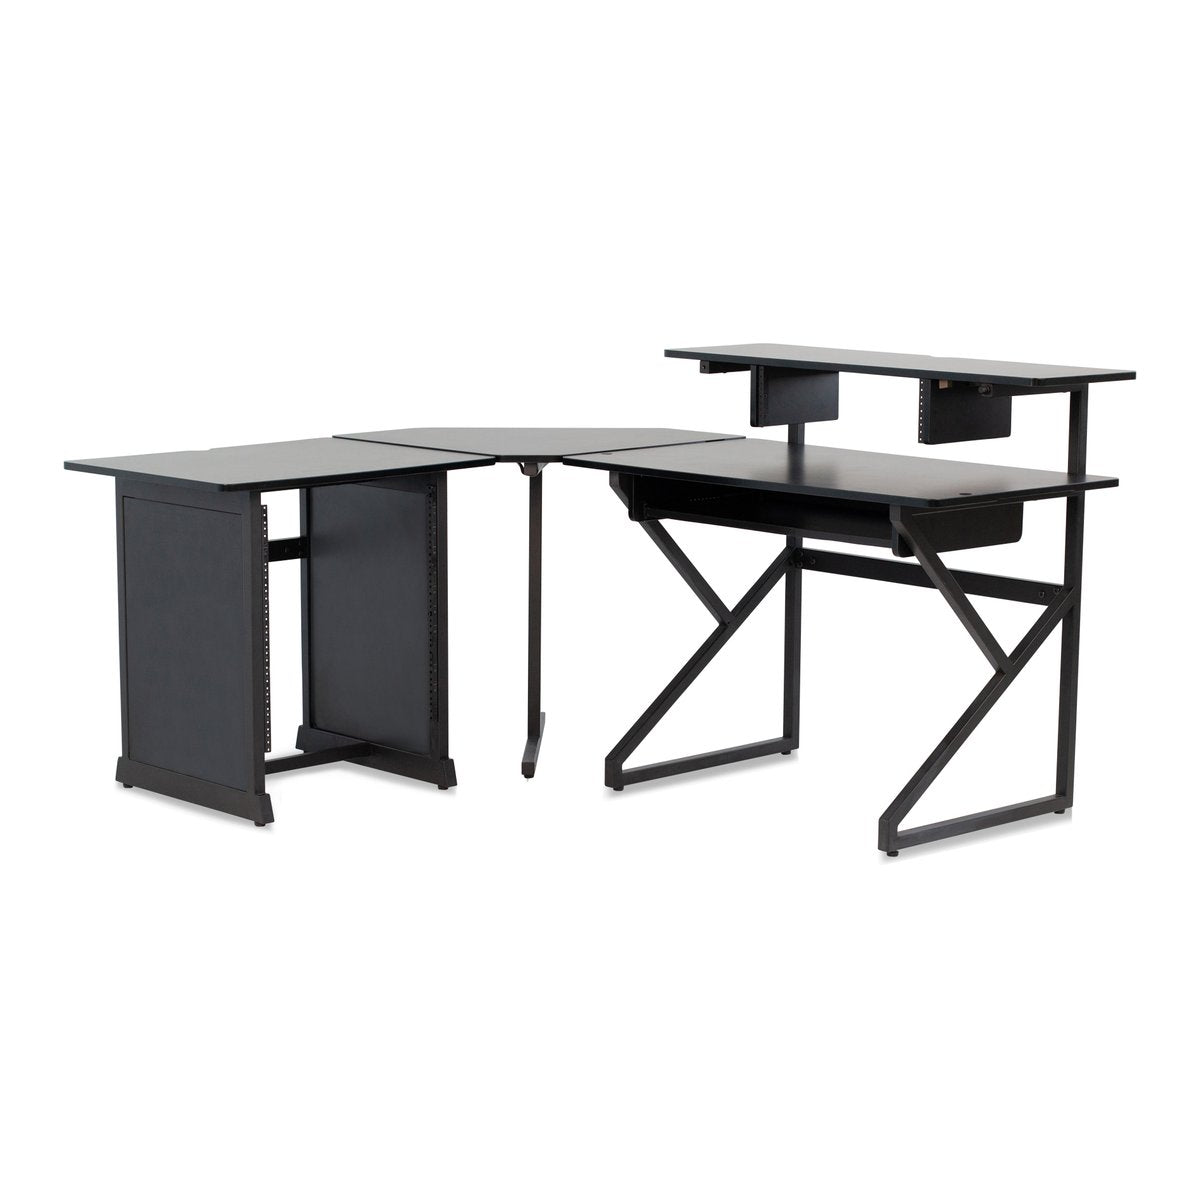 Content Creator Furniture Series Desk Set in Black Finish with Main Desk, Corner Section & 12U Studio Rack Table